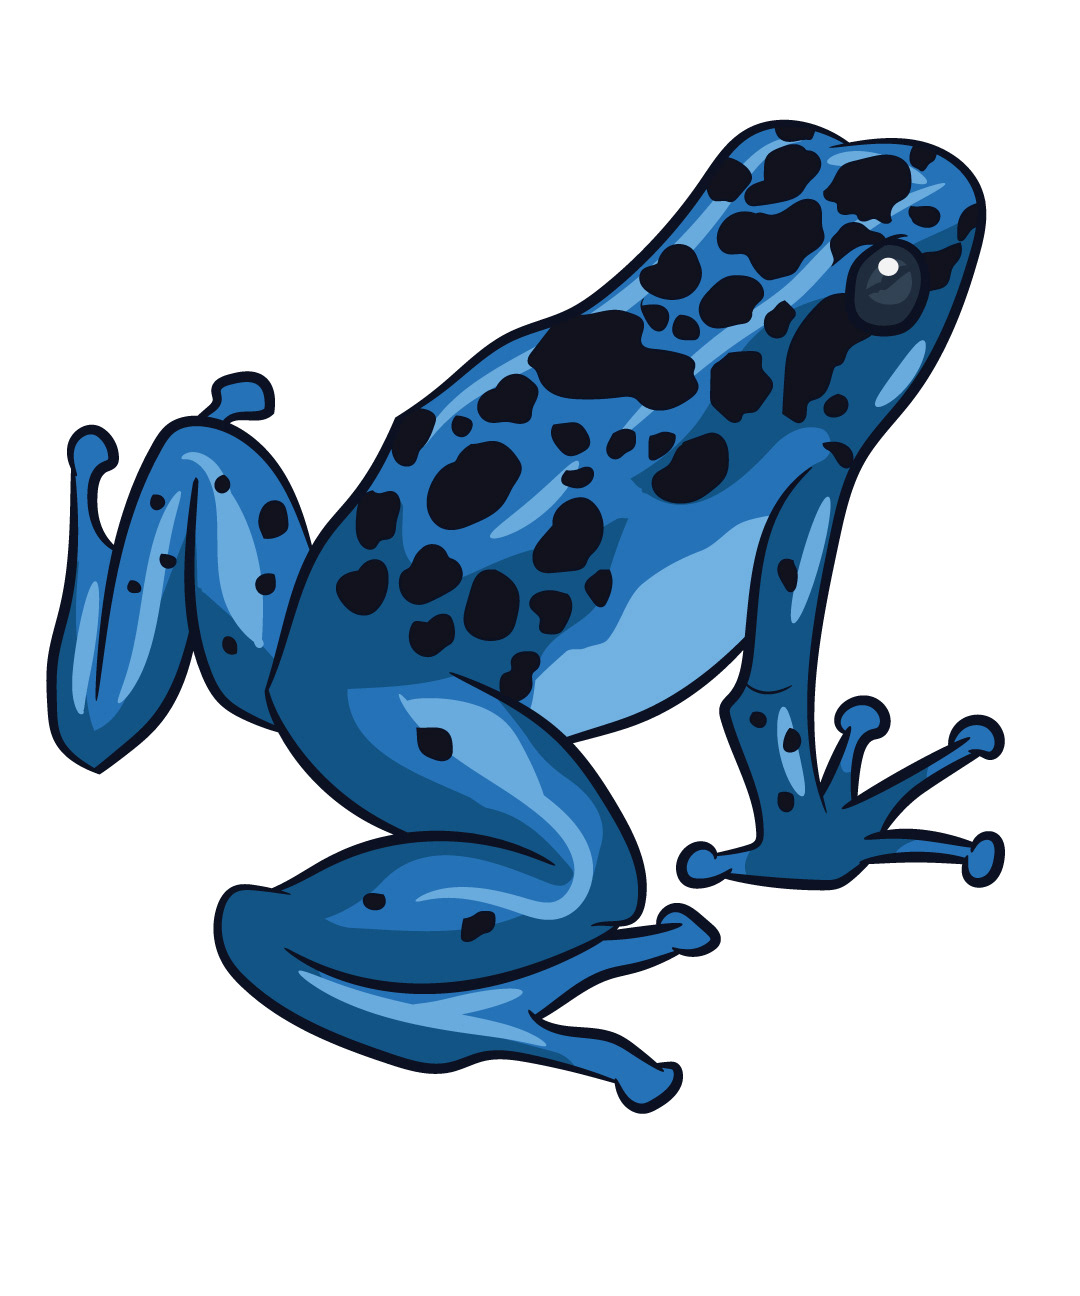 Blue Frog on Behance